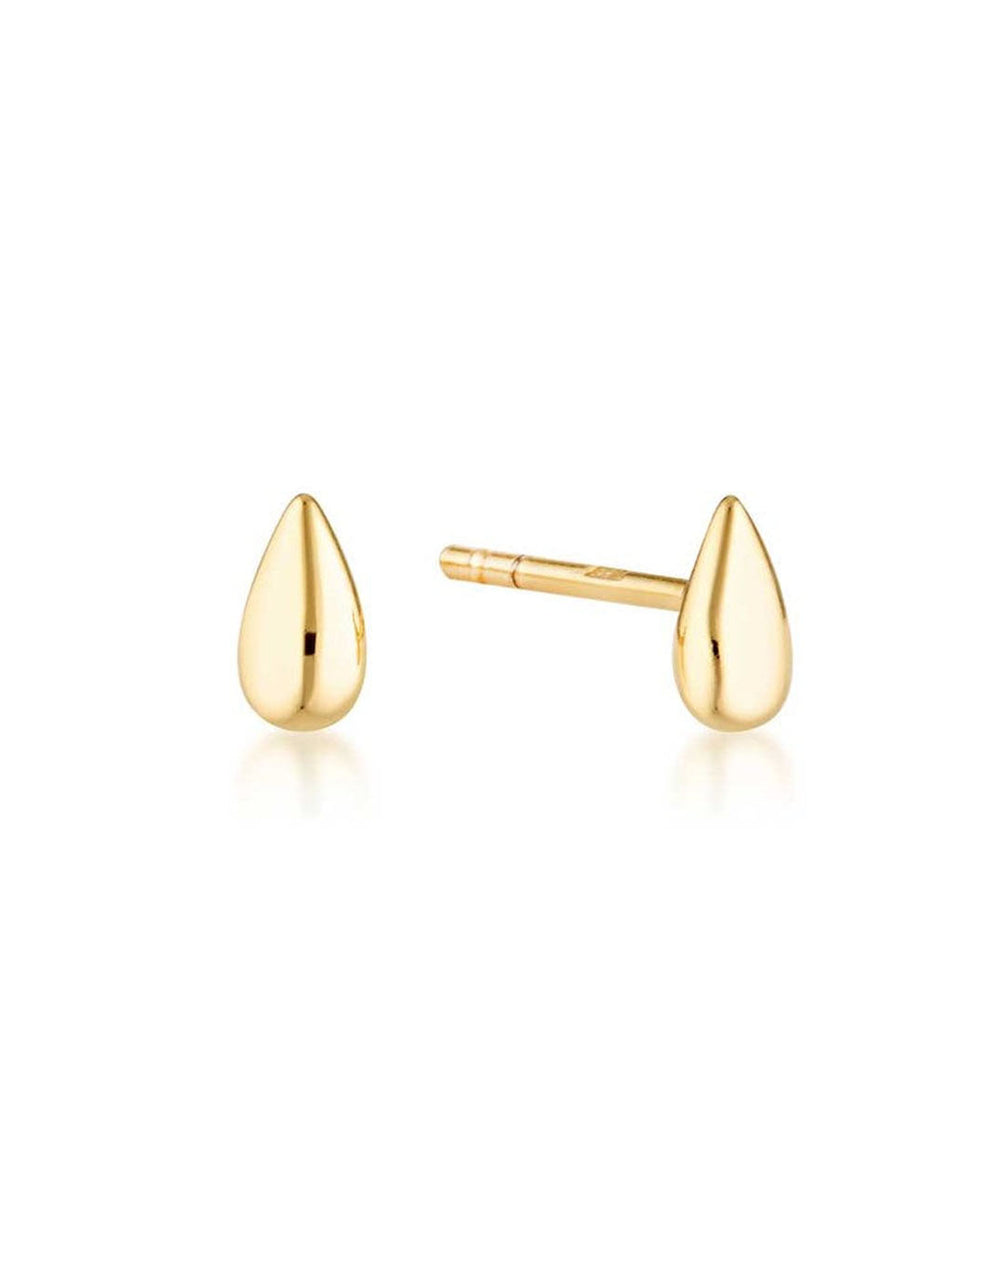 Petal Stud Earrings - Gold Plated Sterling Silver